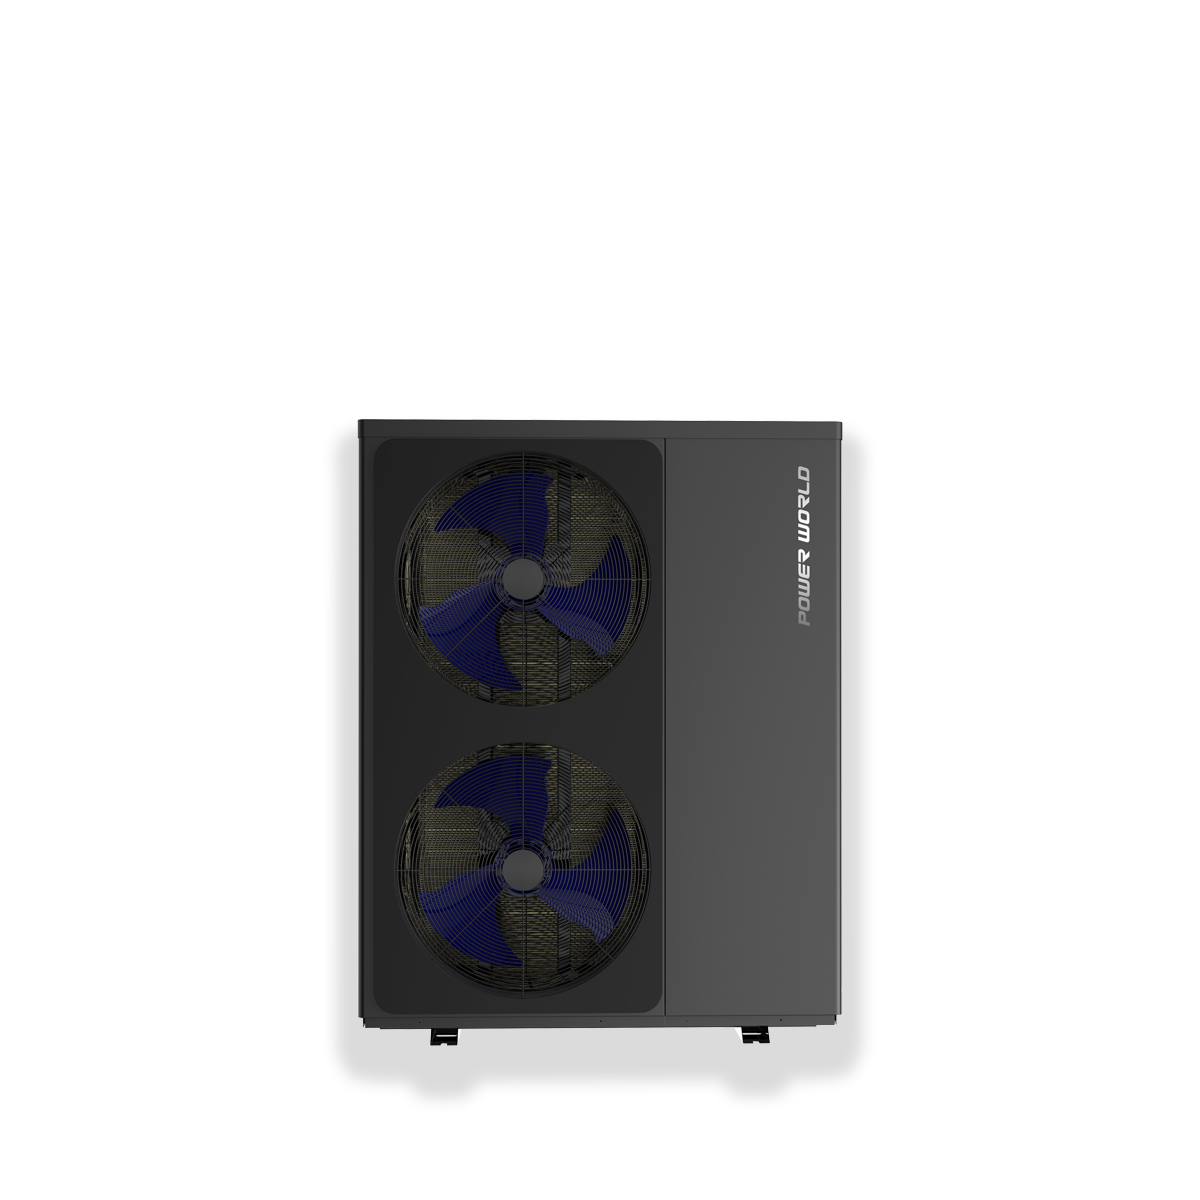 Residential R290 Inverter Air to Water Heat Pump